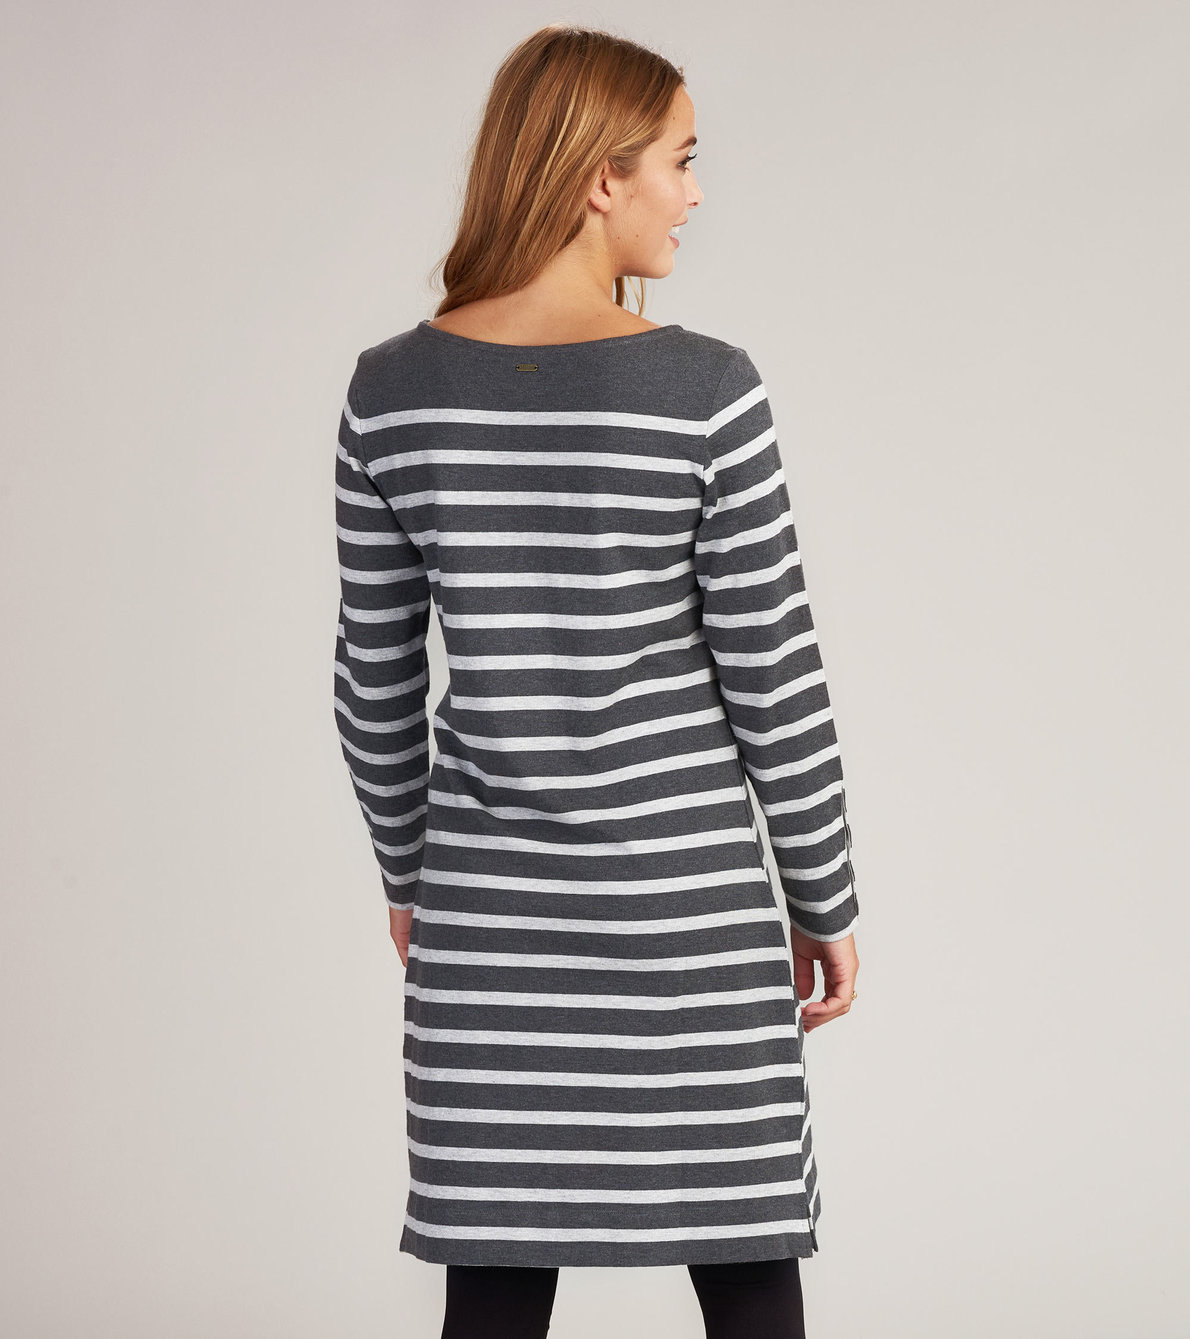 View larger image of Zoe Dress - Charcoal Melange Stripes